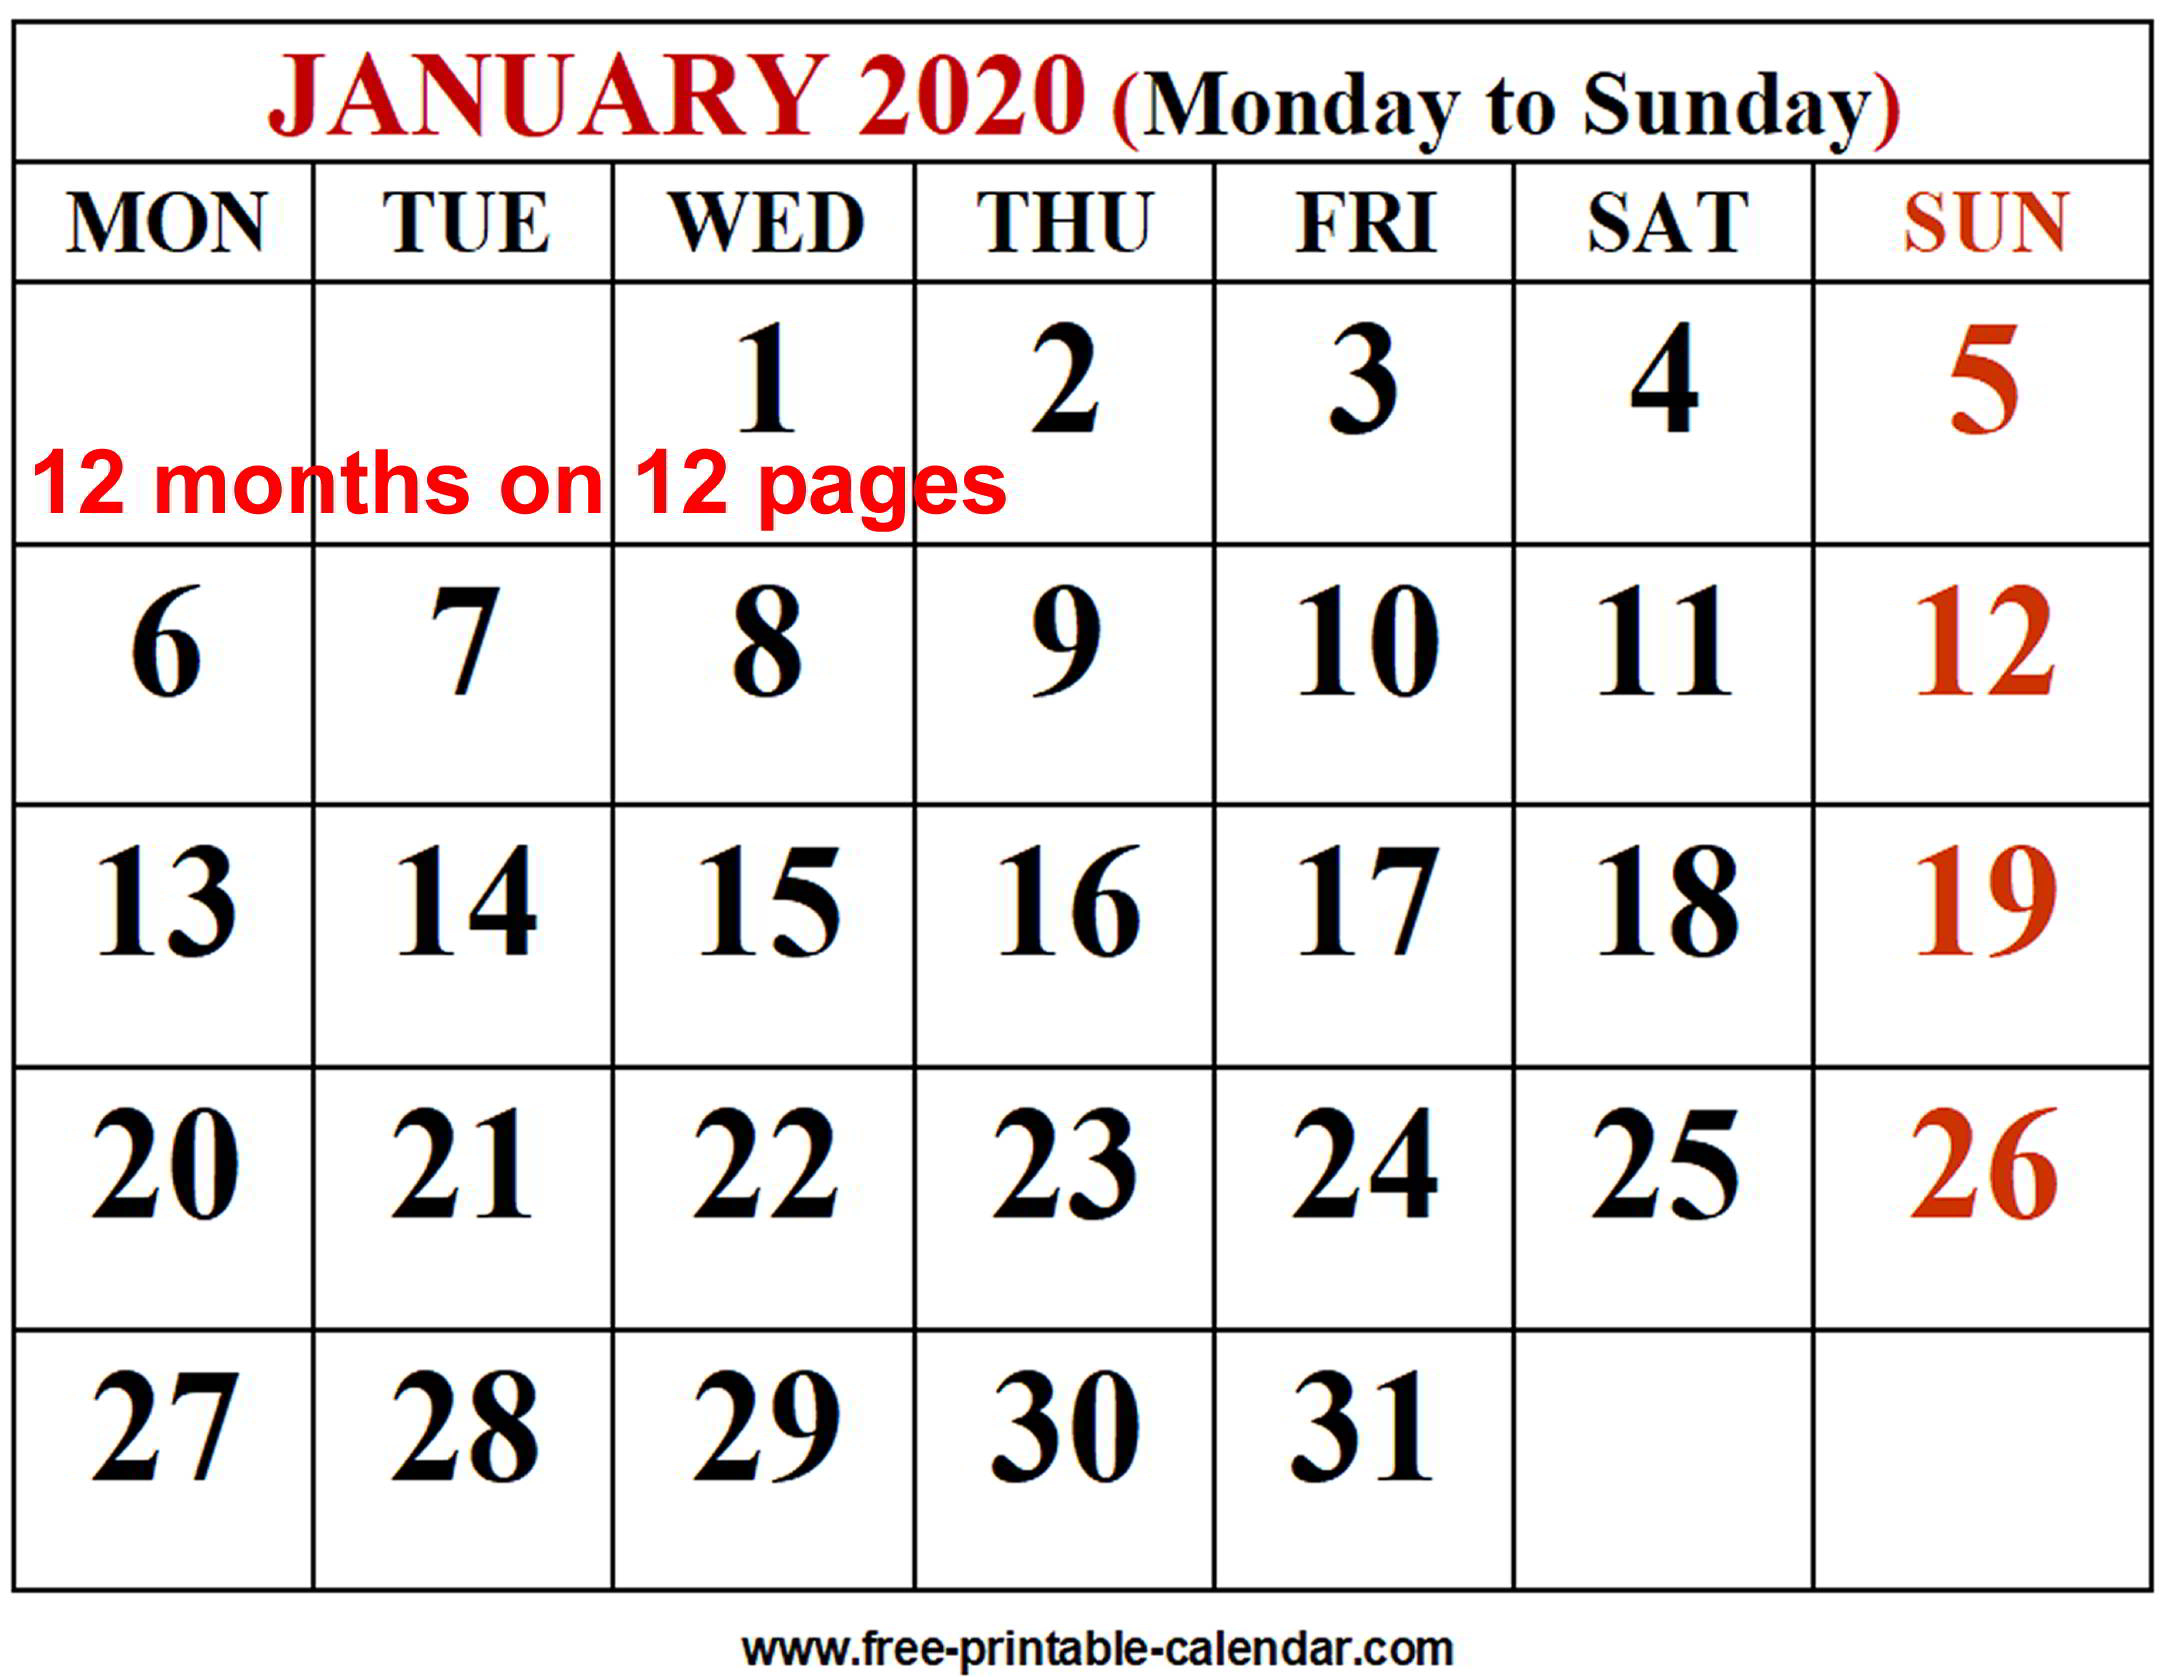 2020 Calendar Template - Free-Printable-Calendar